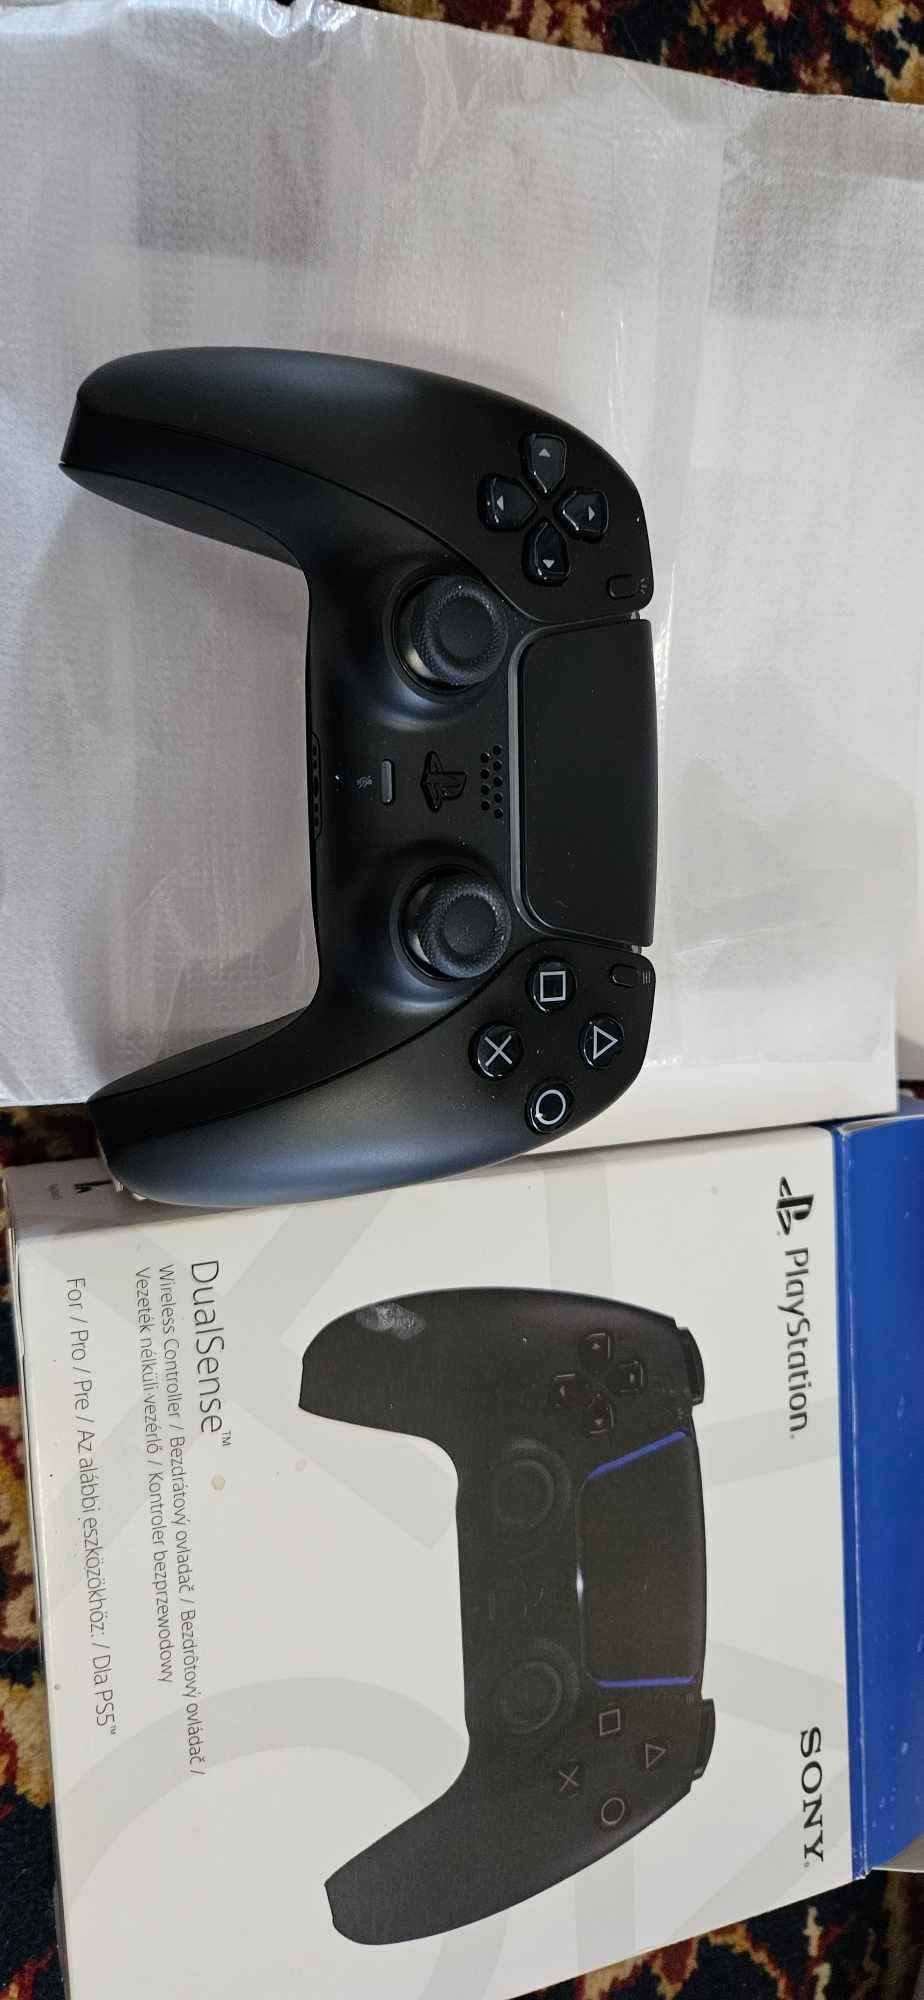 Controller Wireless PlayStation 5 DualSense Midnight Black